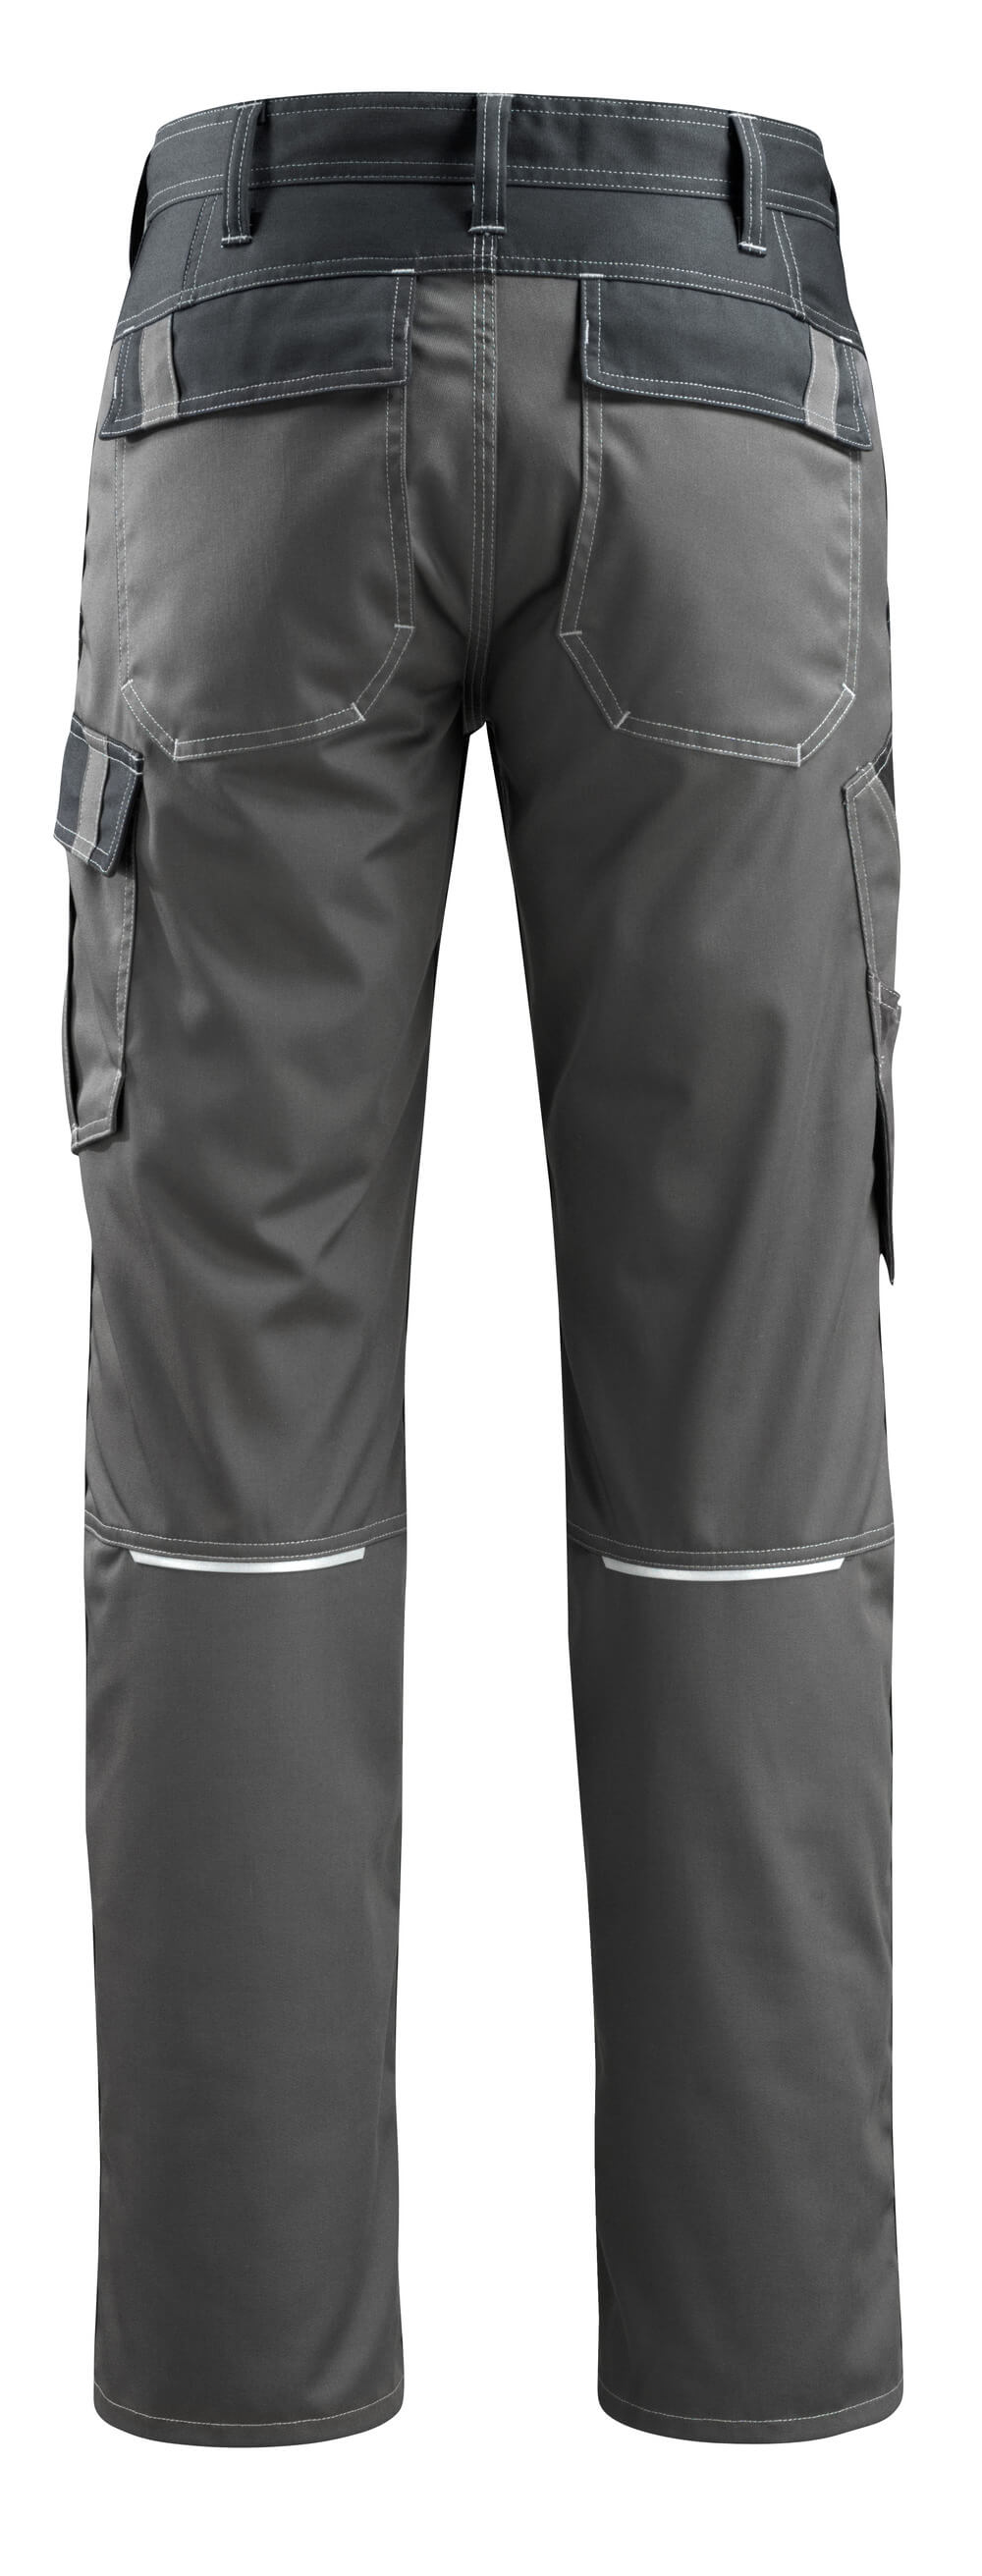 Mascot LIGHT  Temora Trousers with kneepad pockets 15779 dark anthracite/black